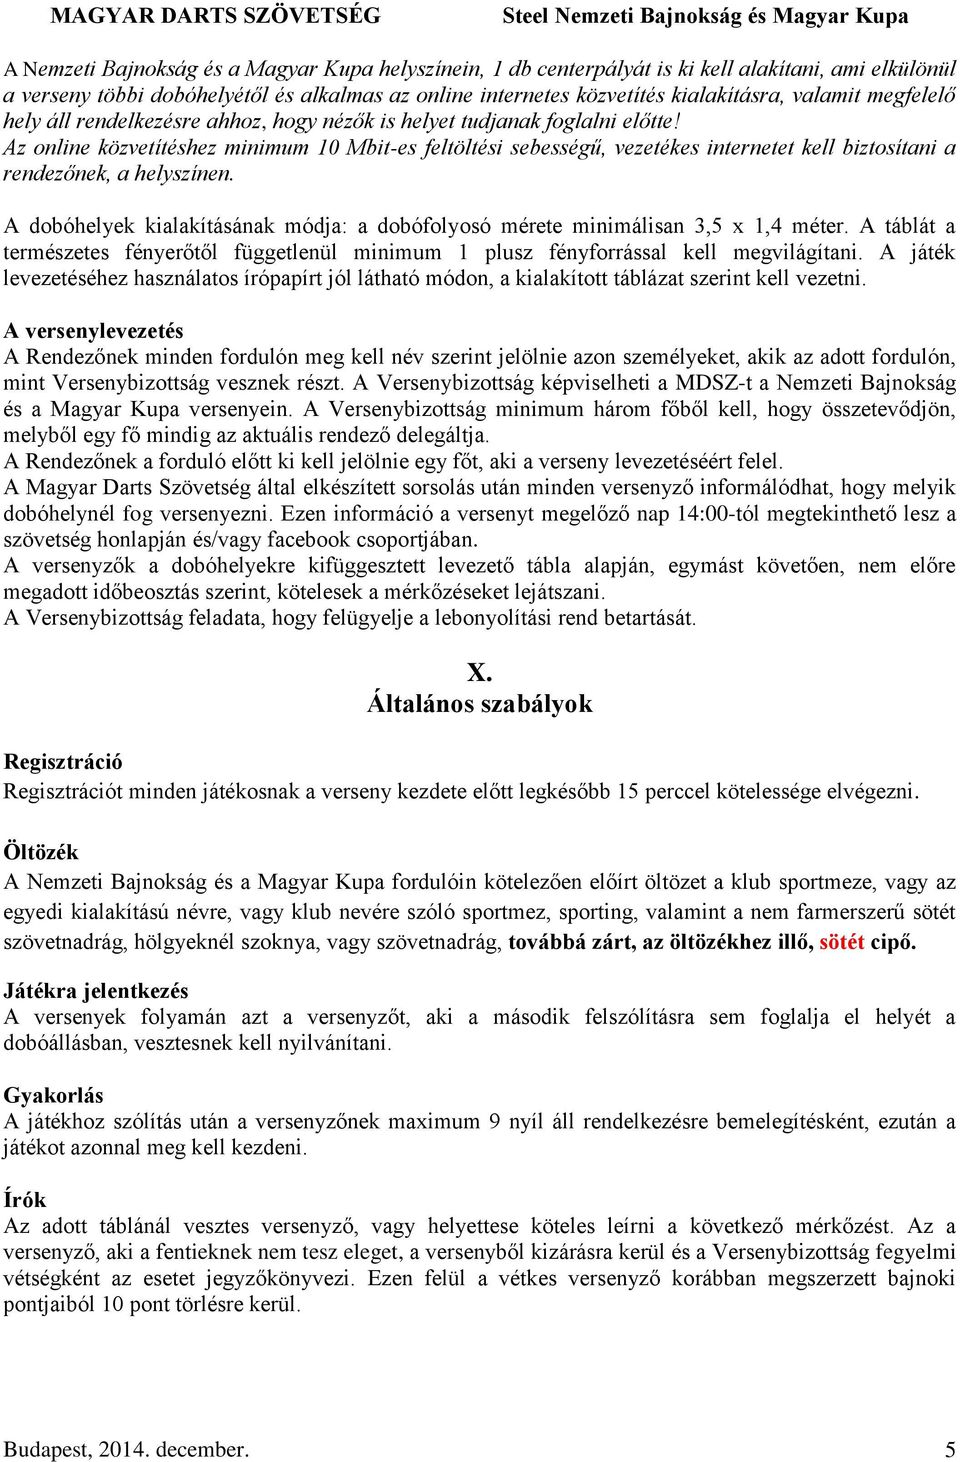 STEEL DARTS NEMZETI BAJNOKSÁG ÉS MAGYAR KUPA - PDF Free Download